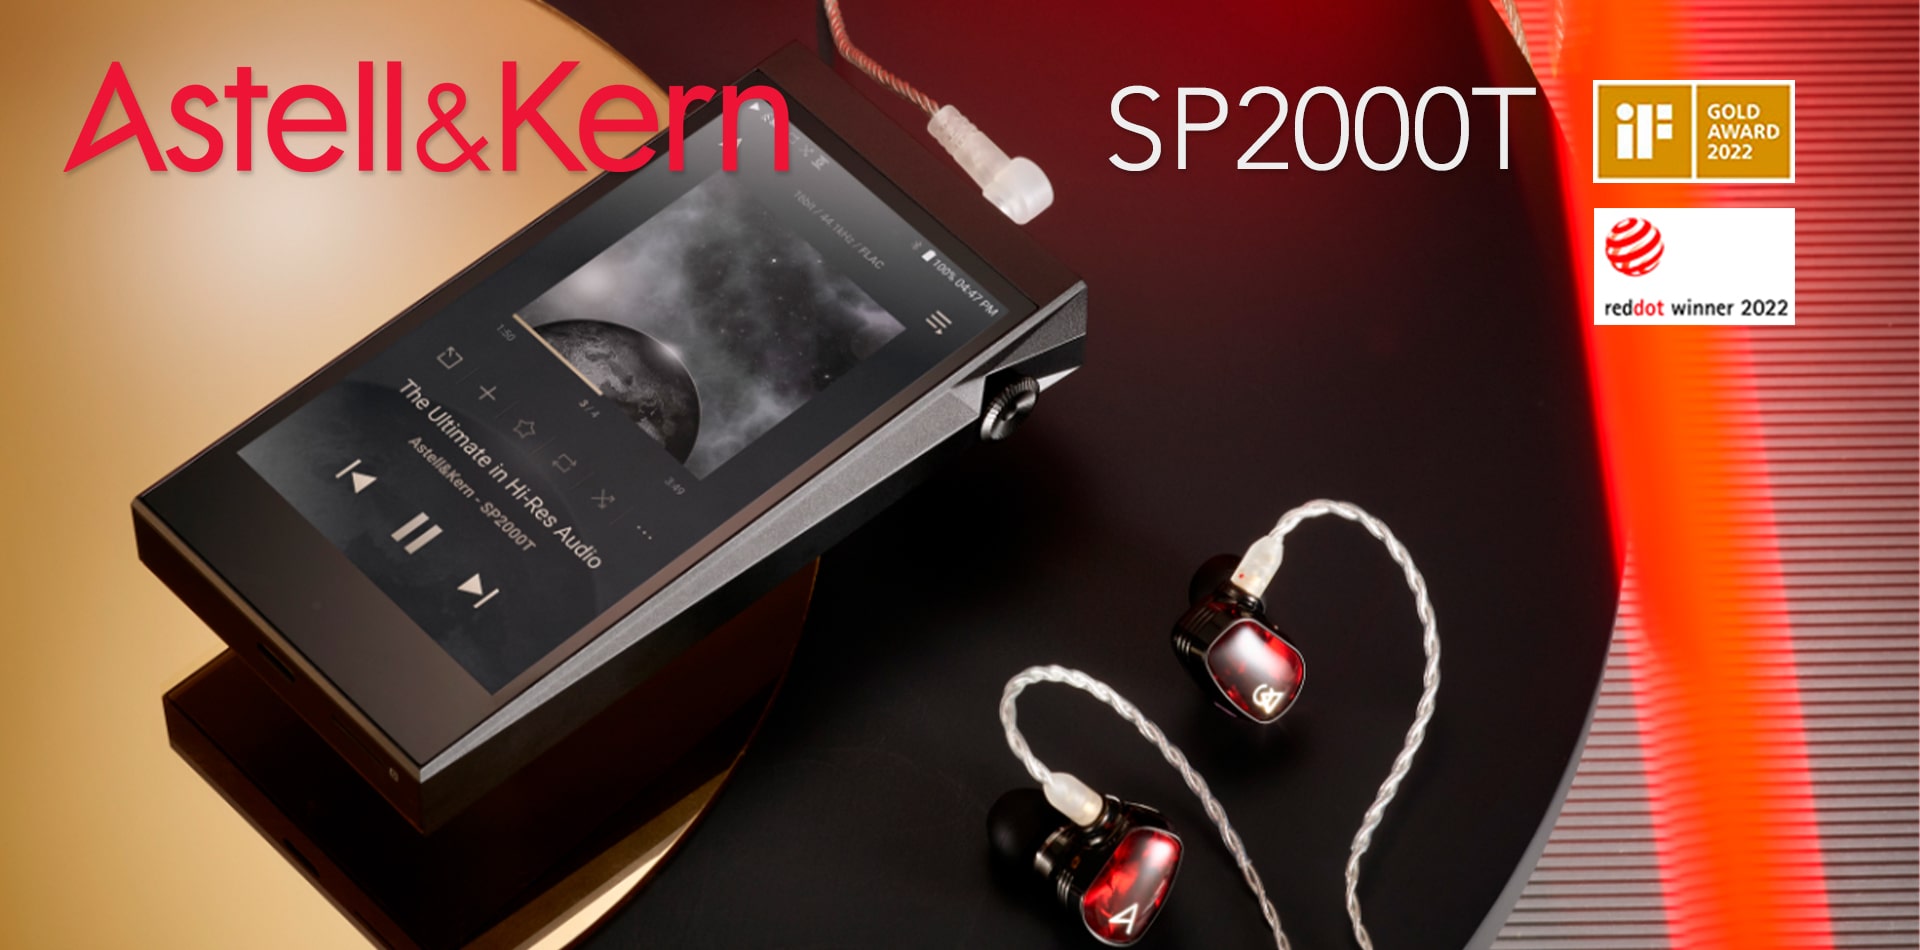 Astell & Kern SP2000T disponible en Audiohum comprar en color gris